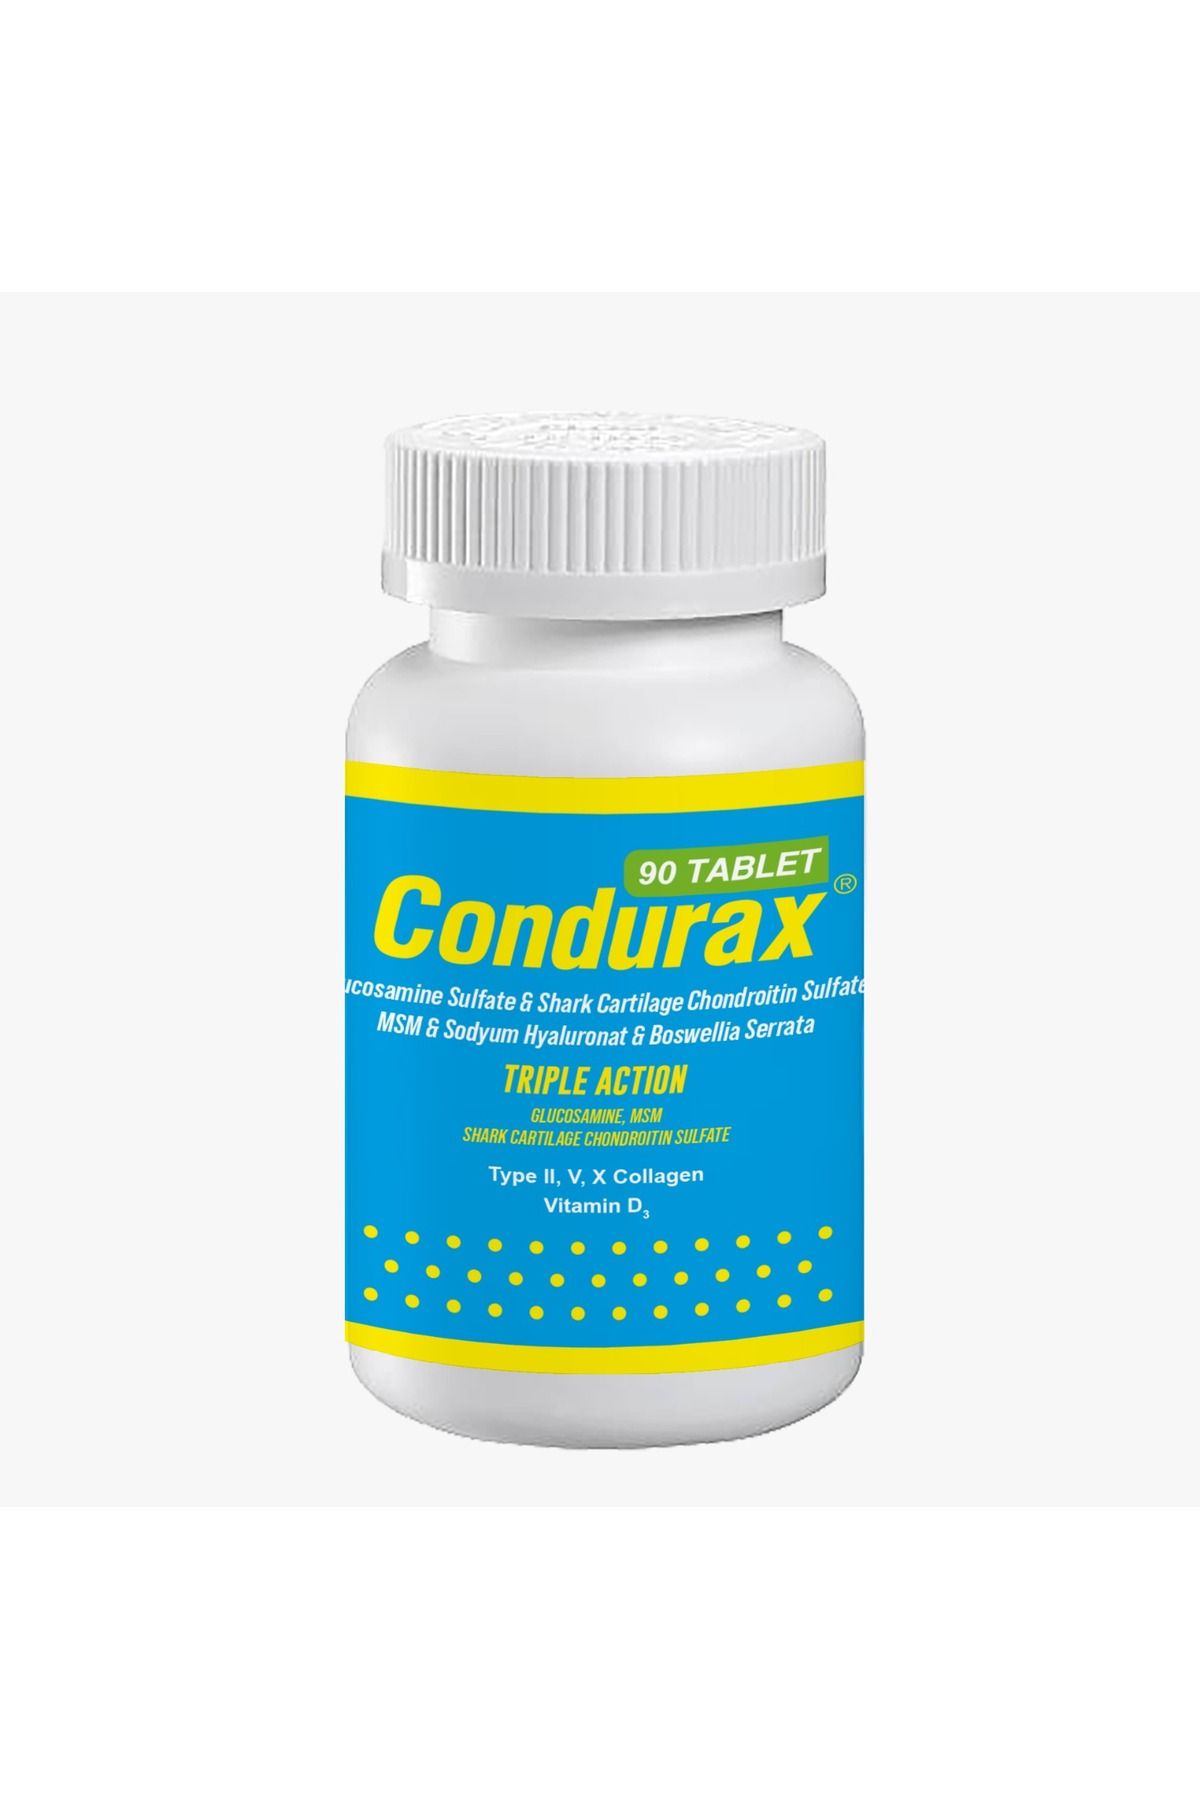 Chondurax Glucosamine Chondroitin Msm 90 Tablet.